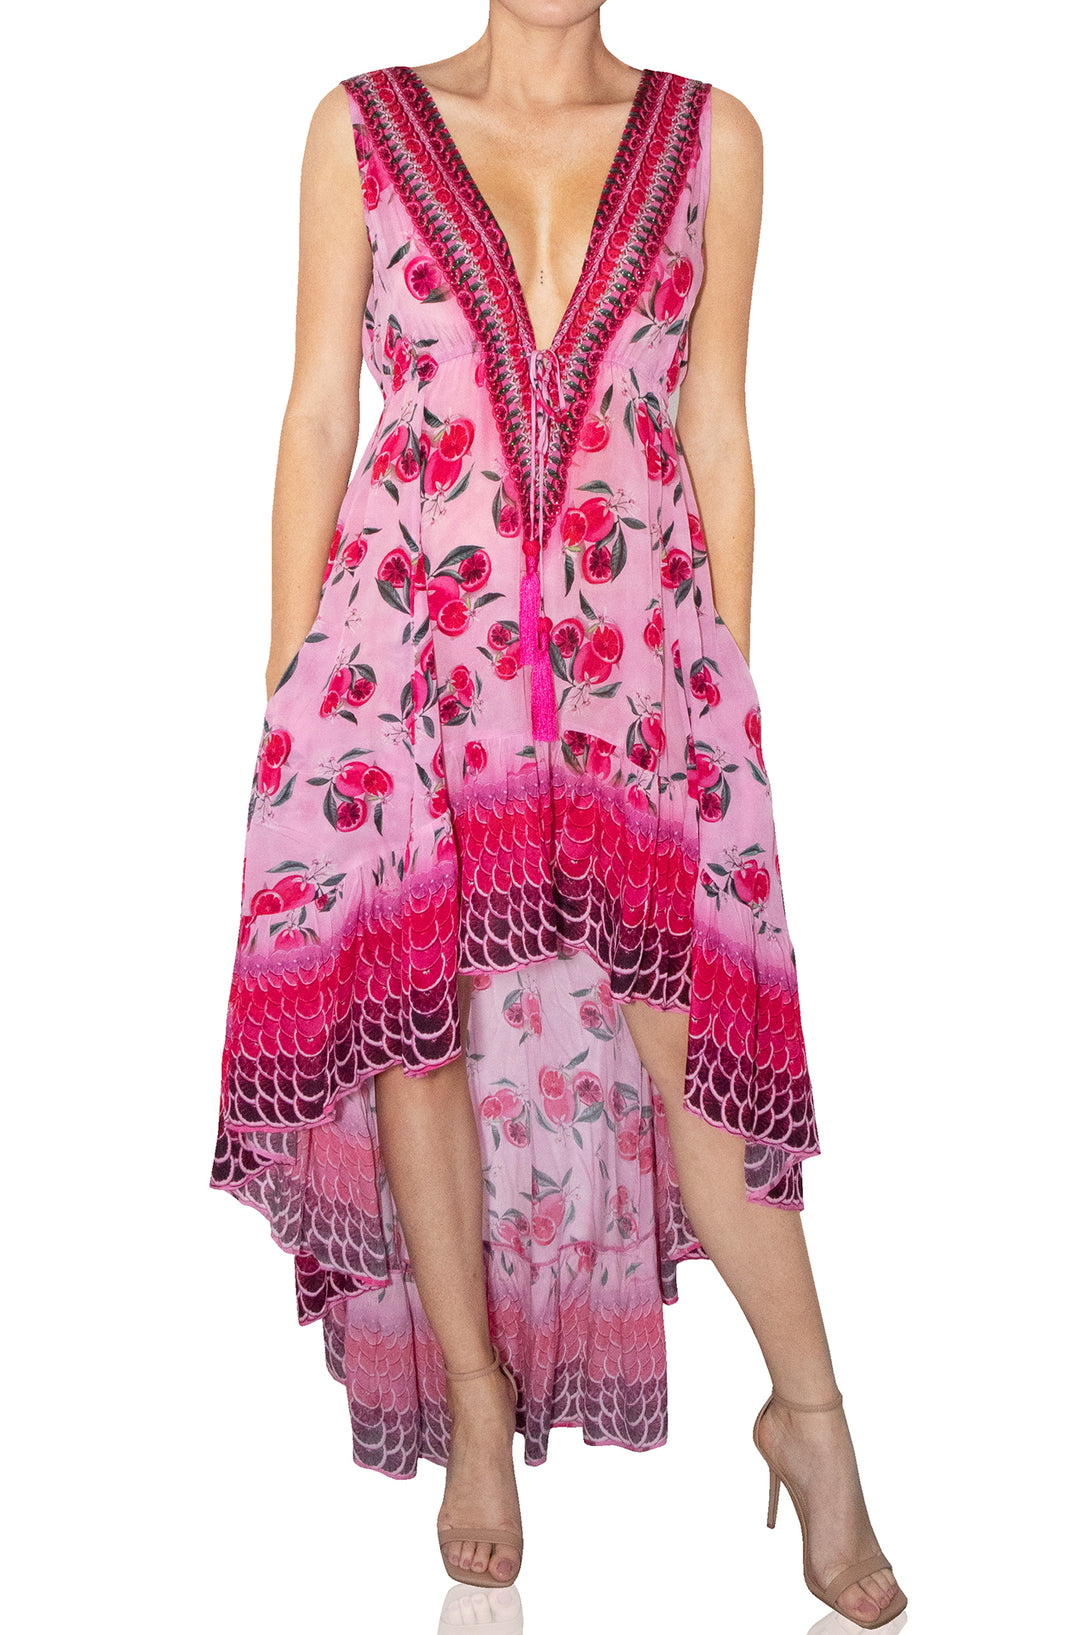  long prom pink dress, formal dresses for women, plus size maxi dresses, Shahida Parides, high low ruffle dress,